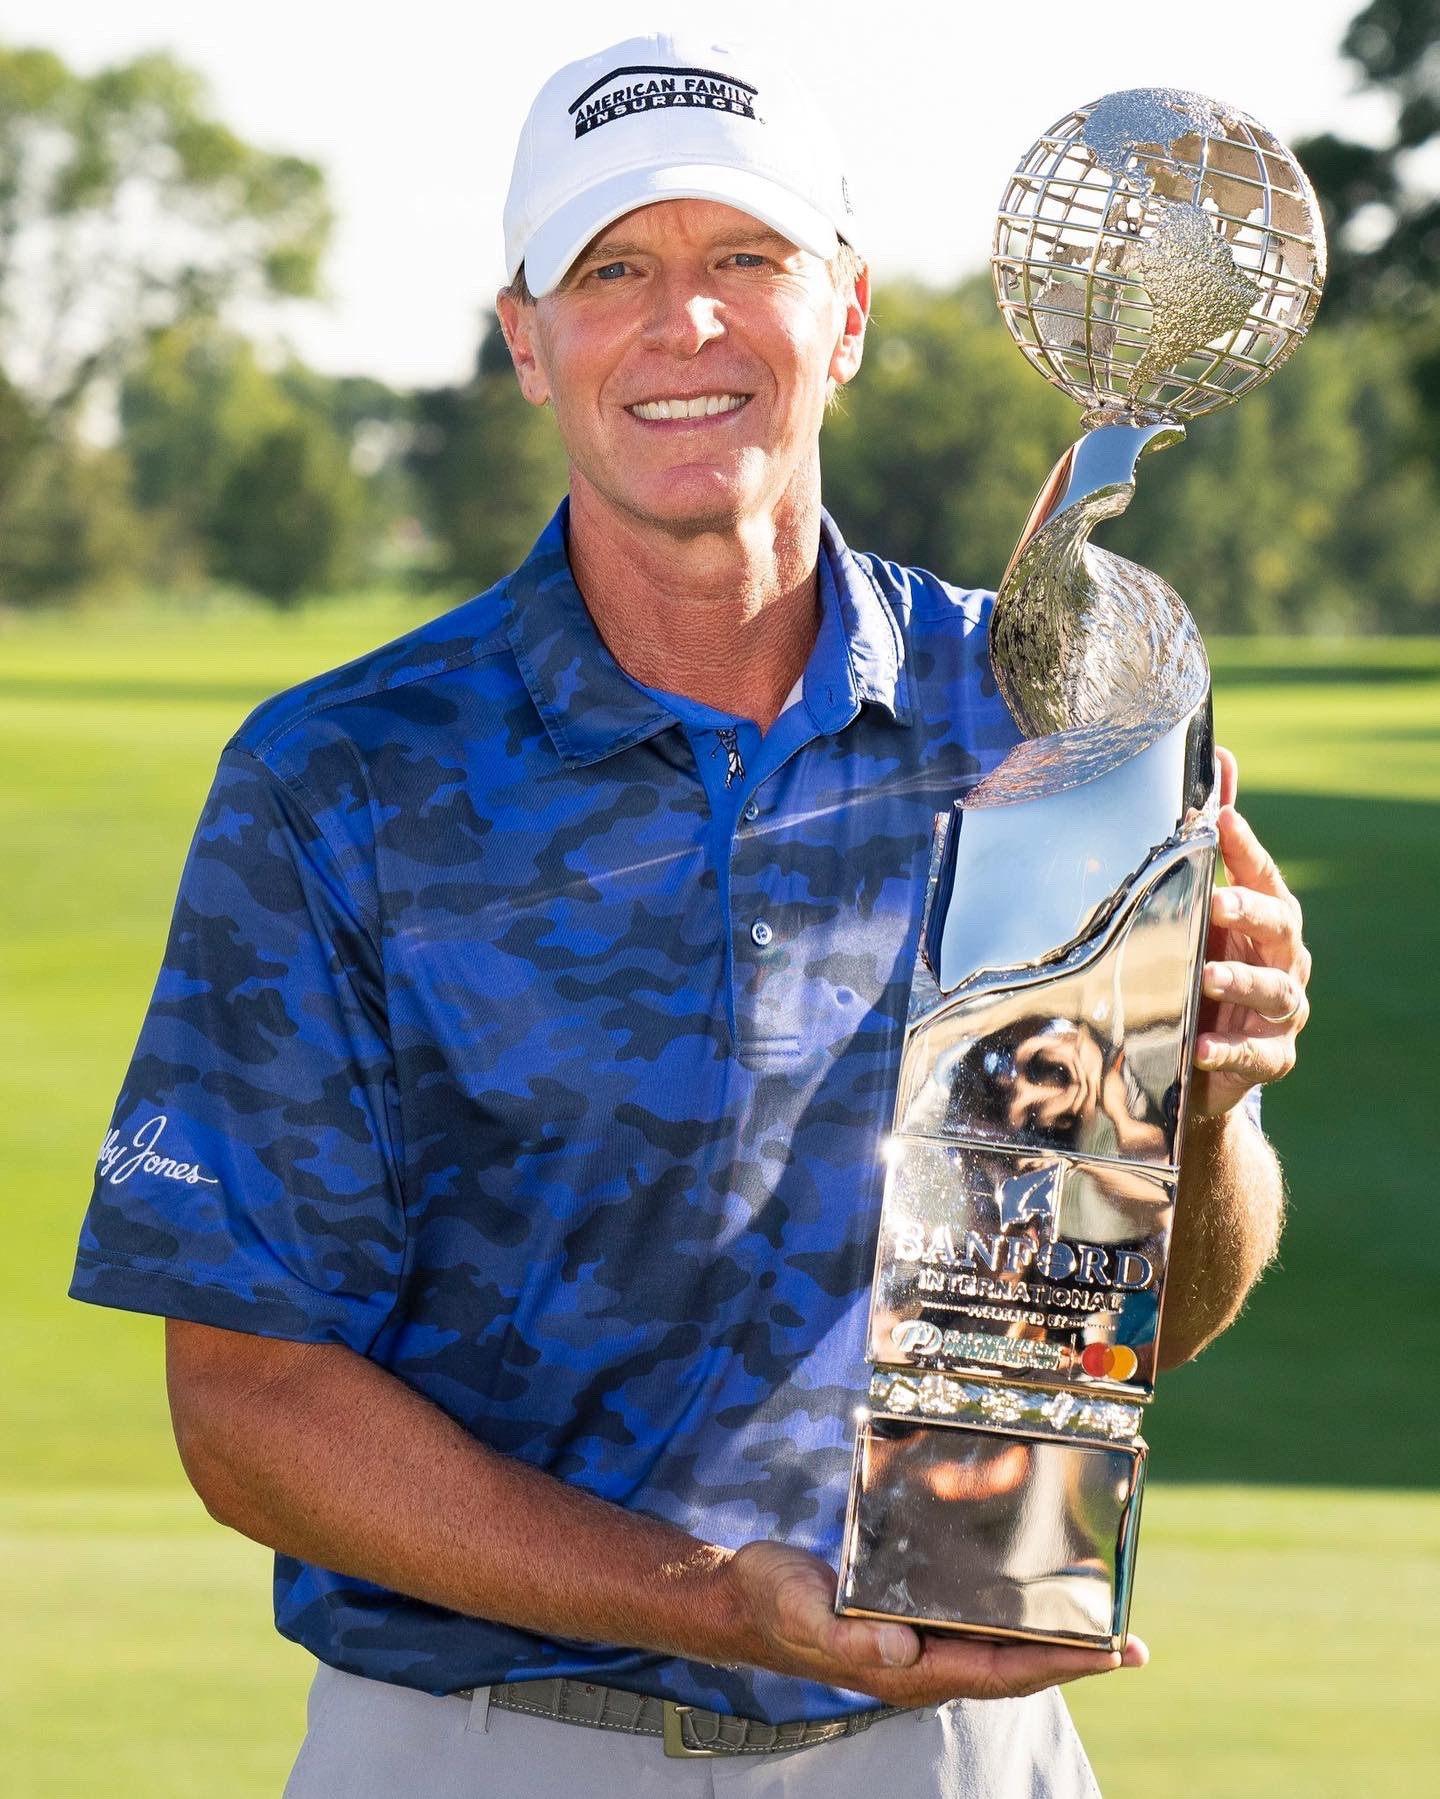 Sanford International Champion Steve Stricker holding redesigned trophy made by Malcolm DeMille